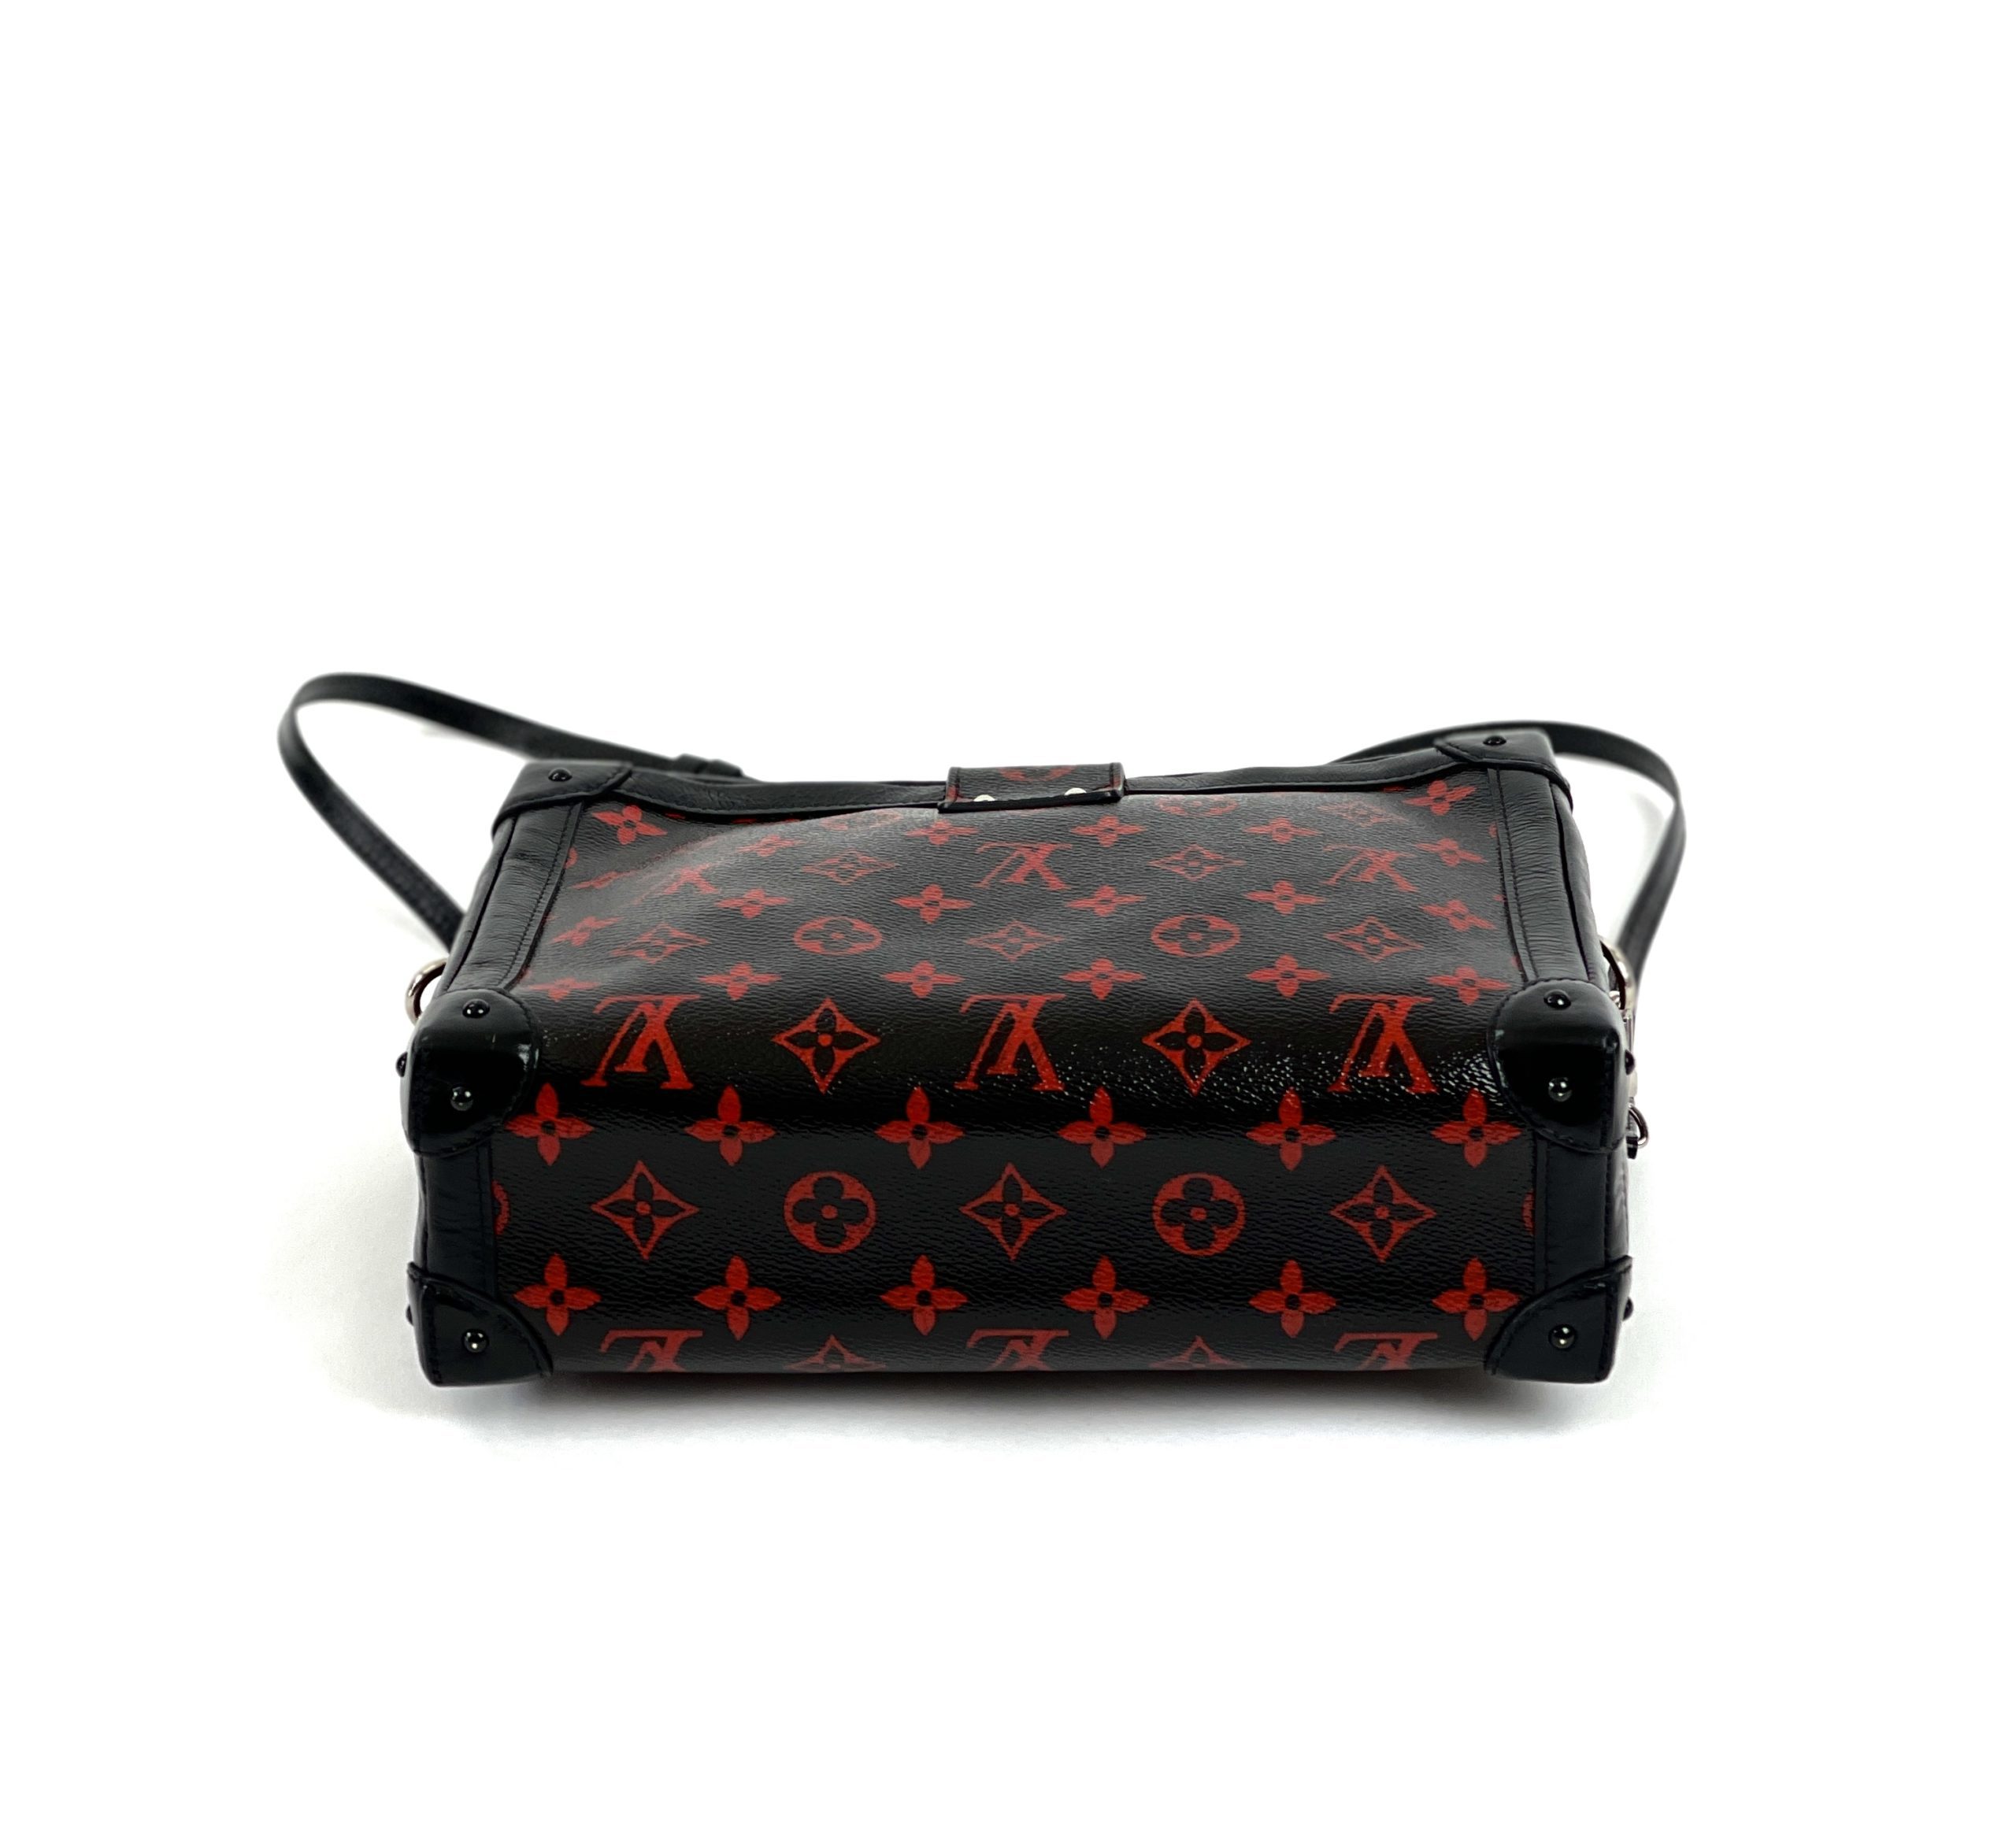 Petite Malle Monogram - Women - Handbags